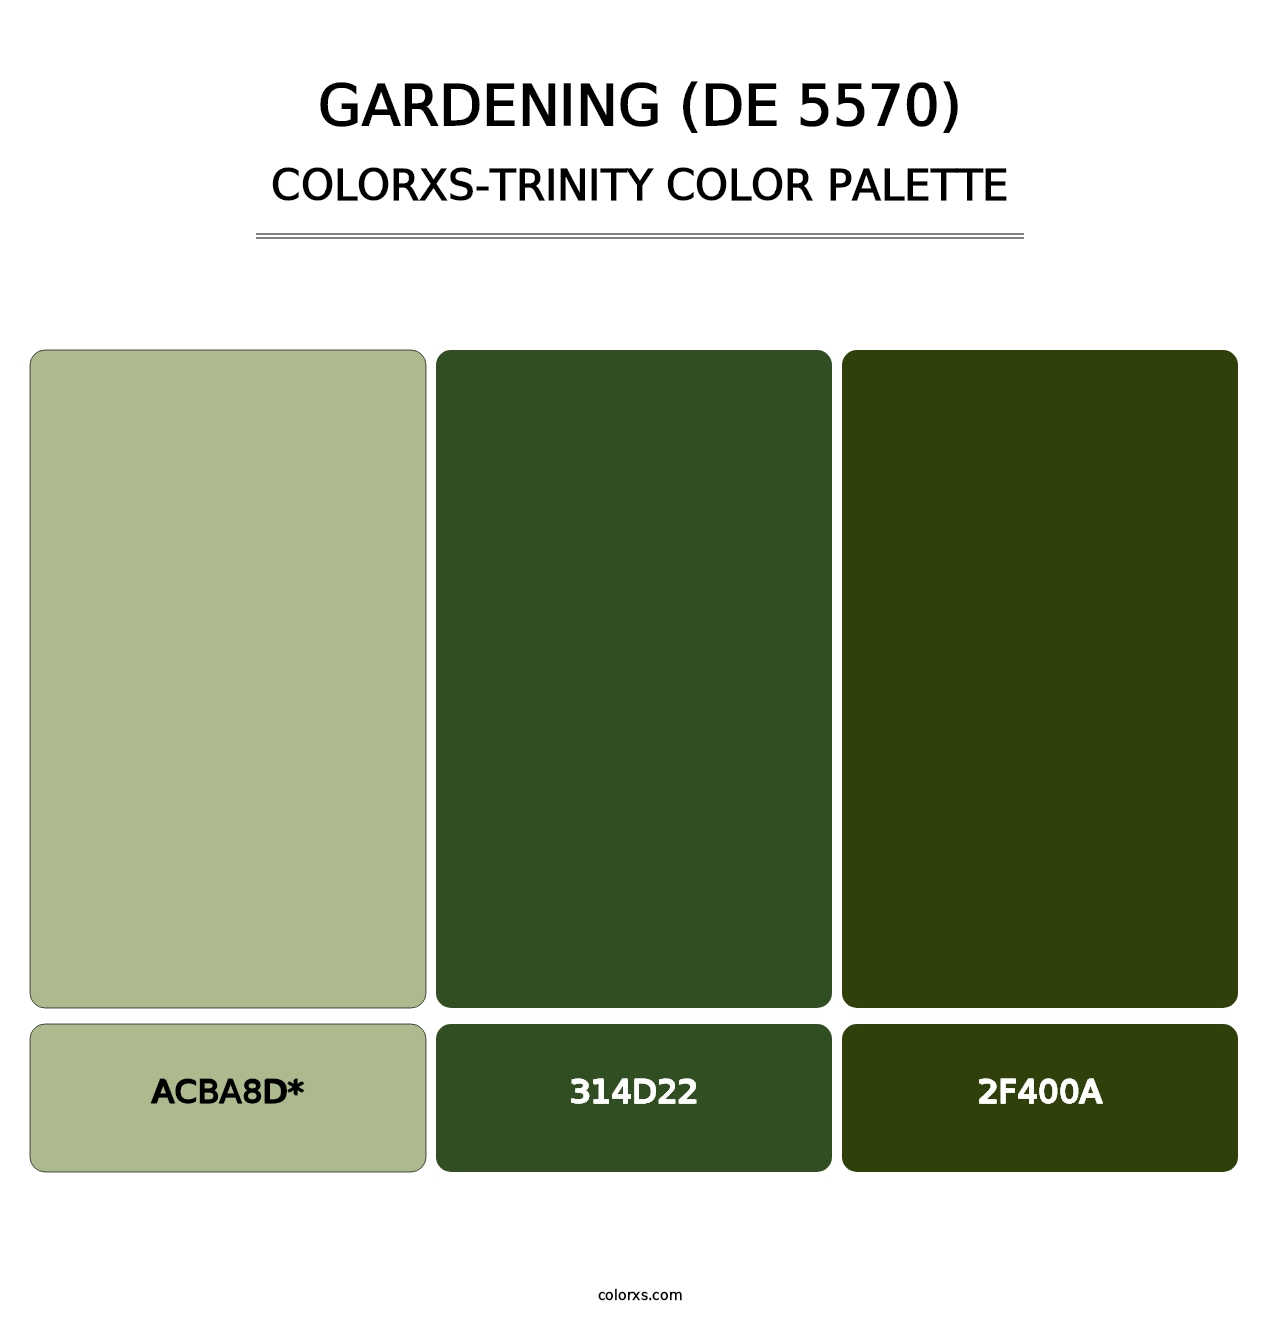 Gardening (DE 5570) - Colorxs Trinity Palette